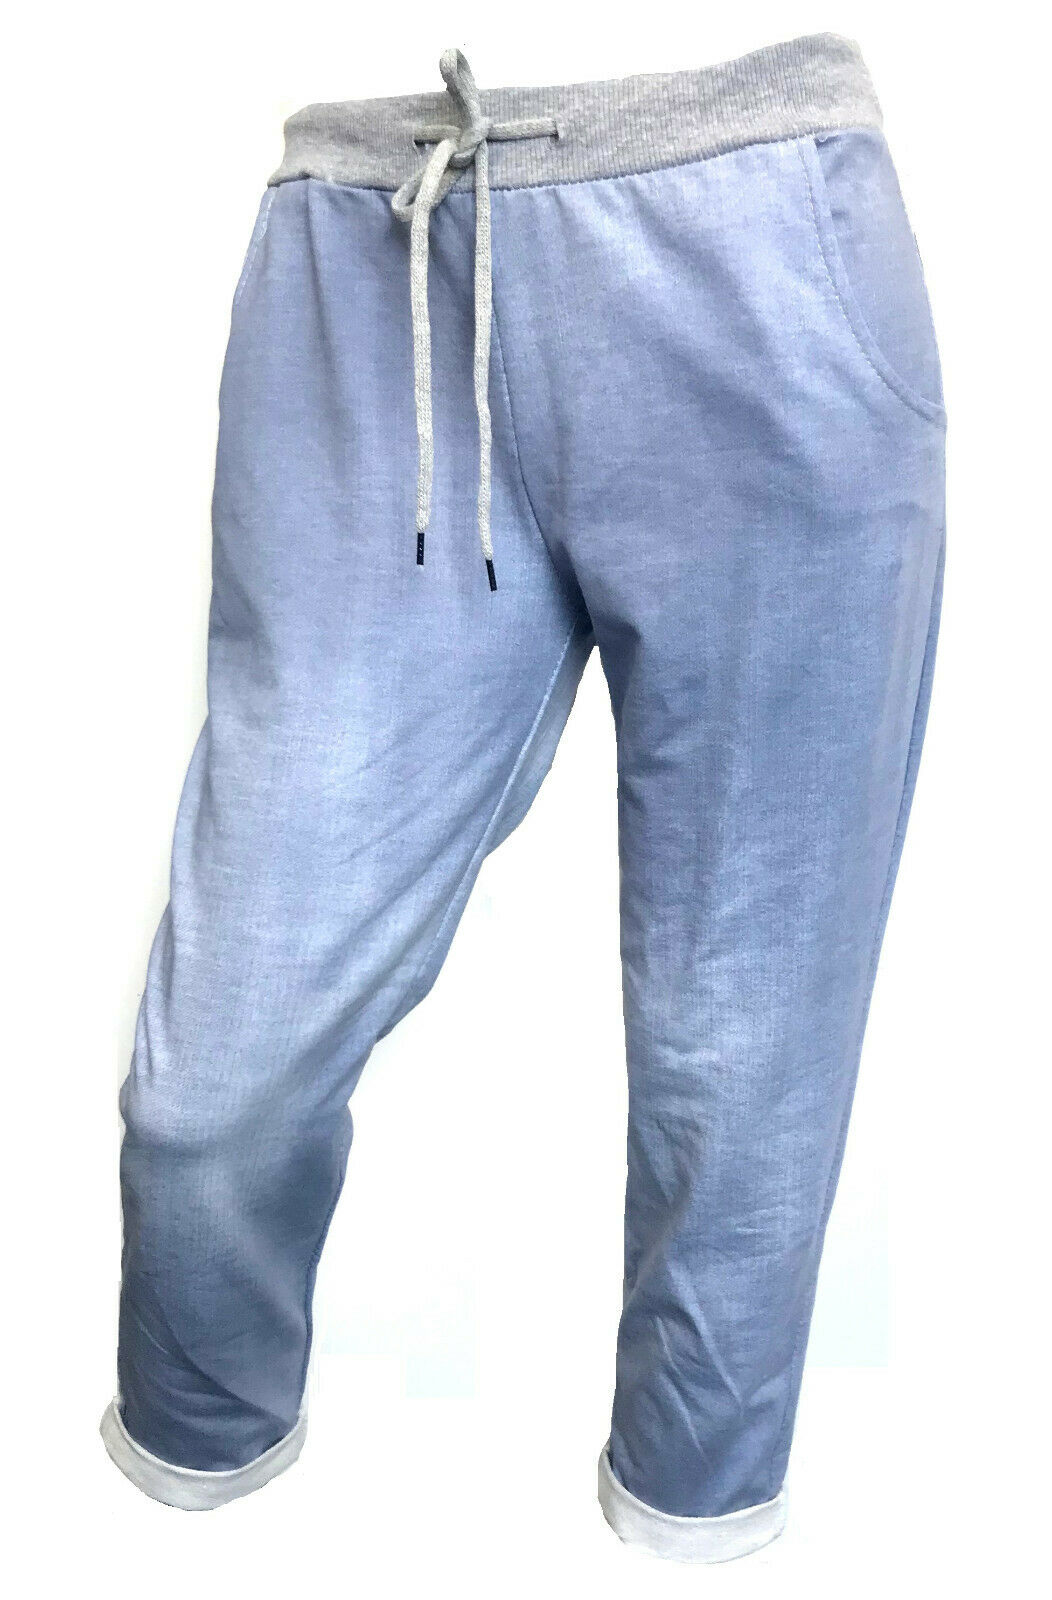 Ladies Italian light Blue Denim Cropped lounge pants. Sizes 8-14, 16-18 Available.